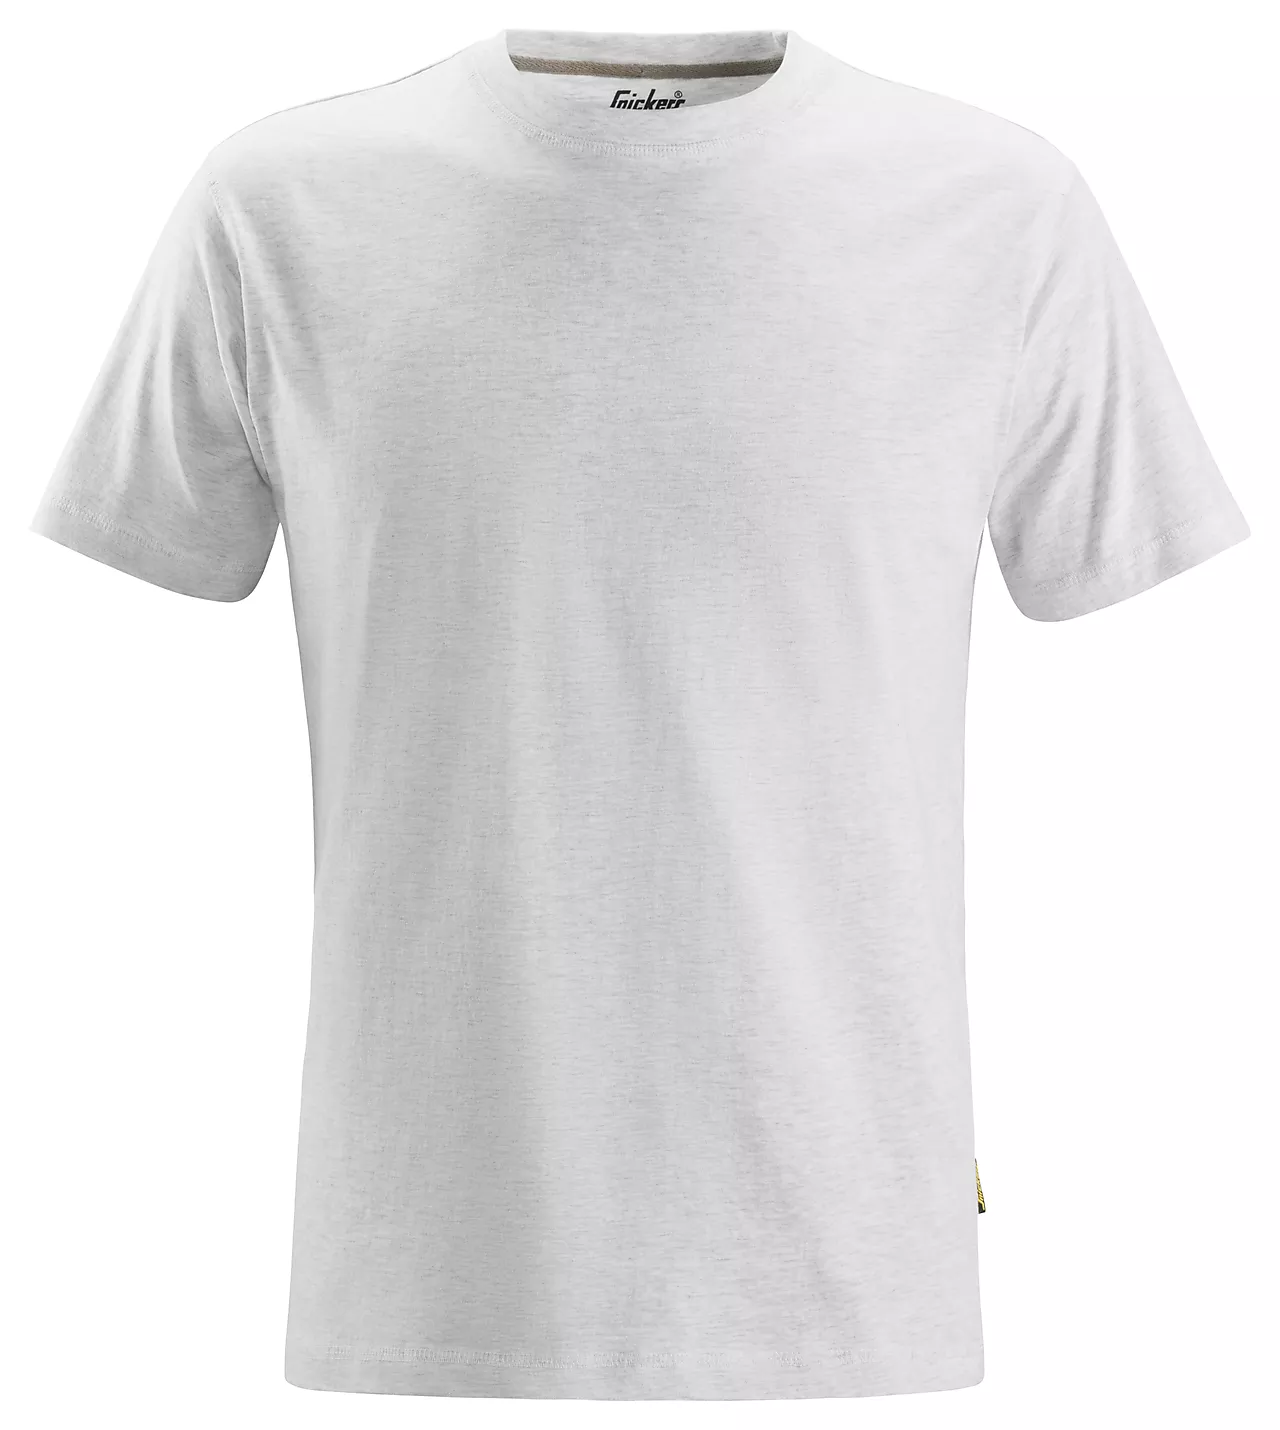 T-skjorte klassisk askegrå str XL